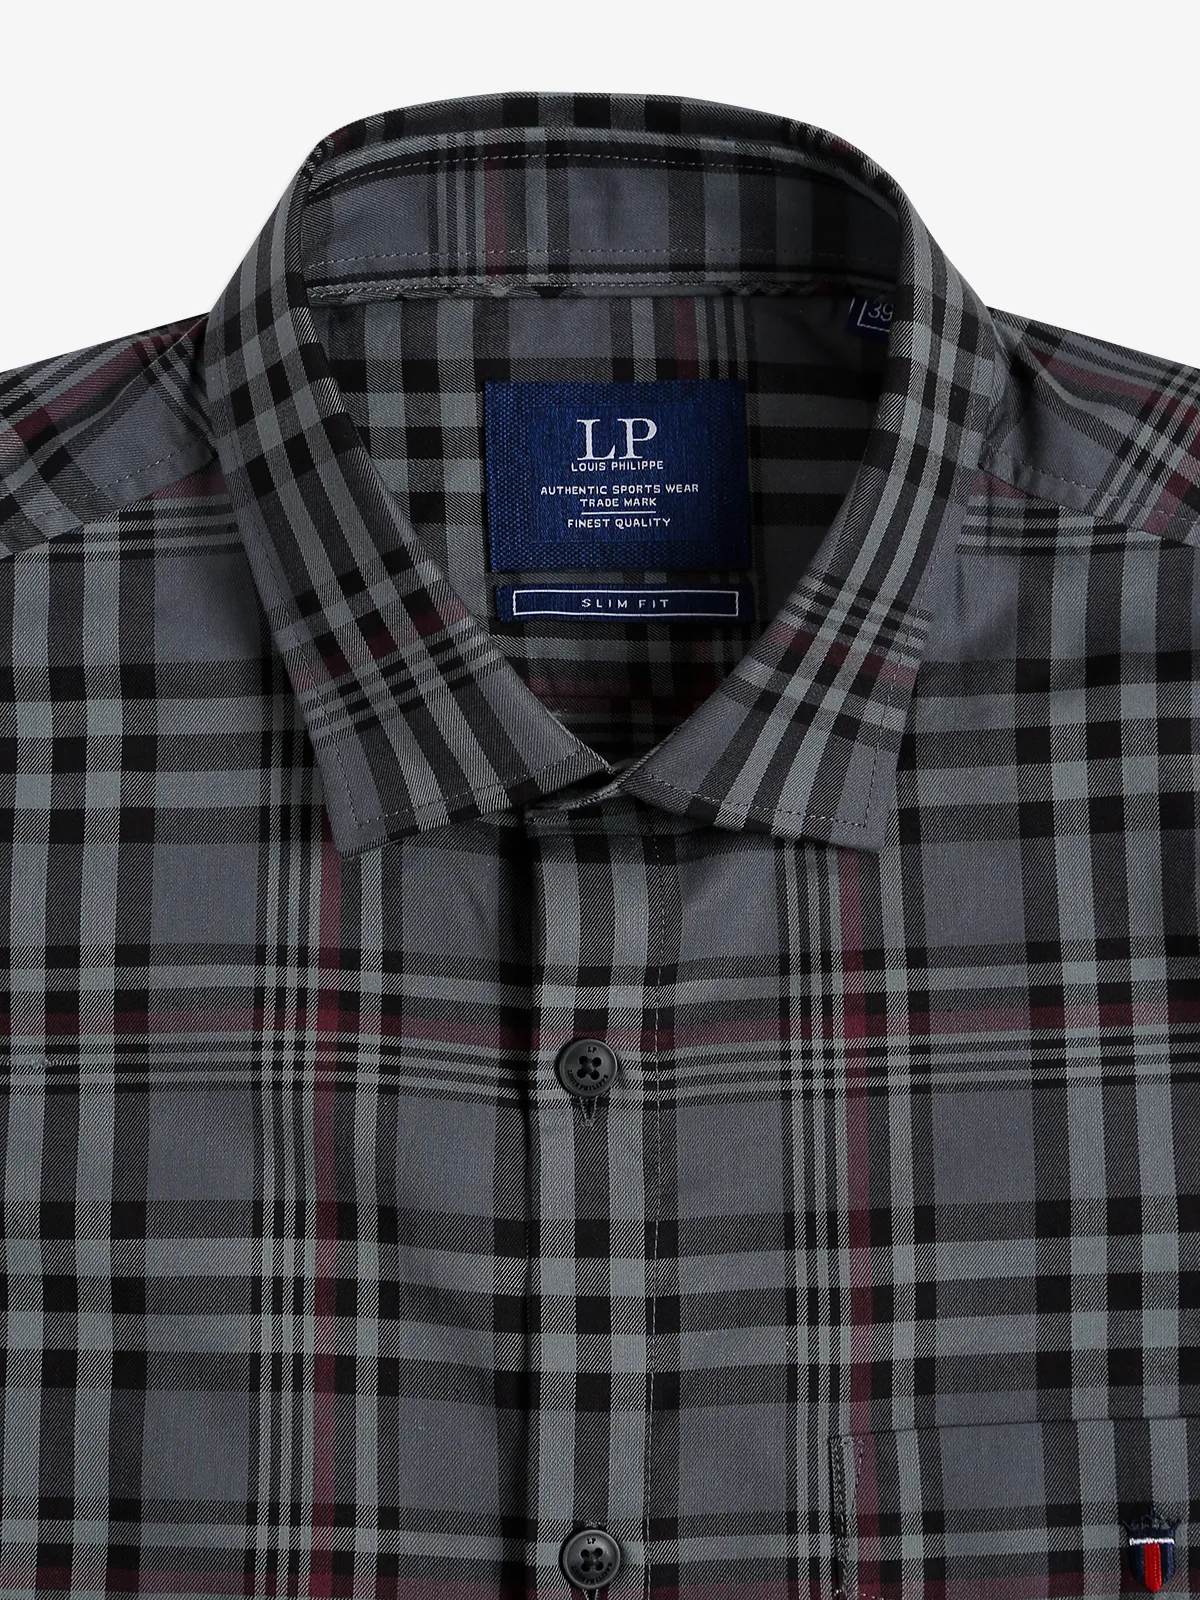 LP grey checks cotton shirt